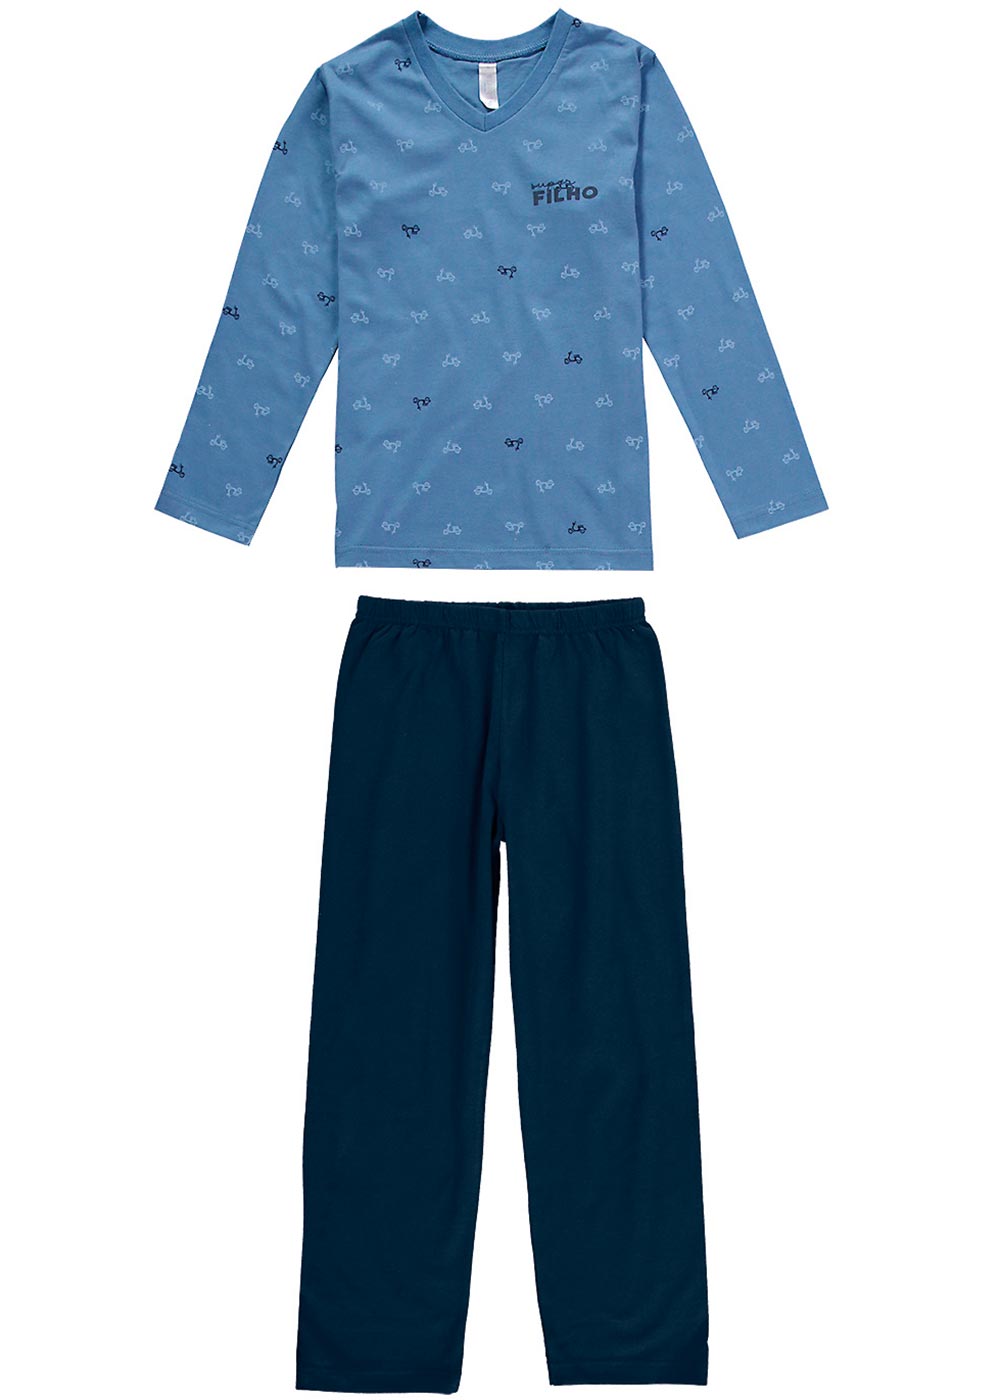 Pijama Infantil Masculino Inverno Azul Super Filho - Malwee